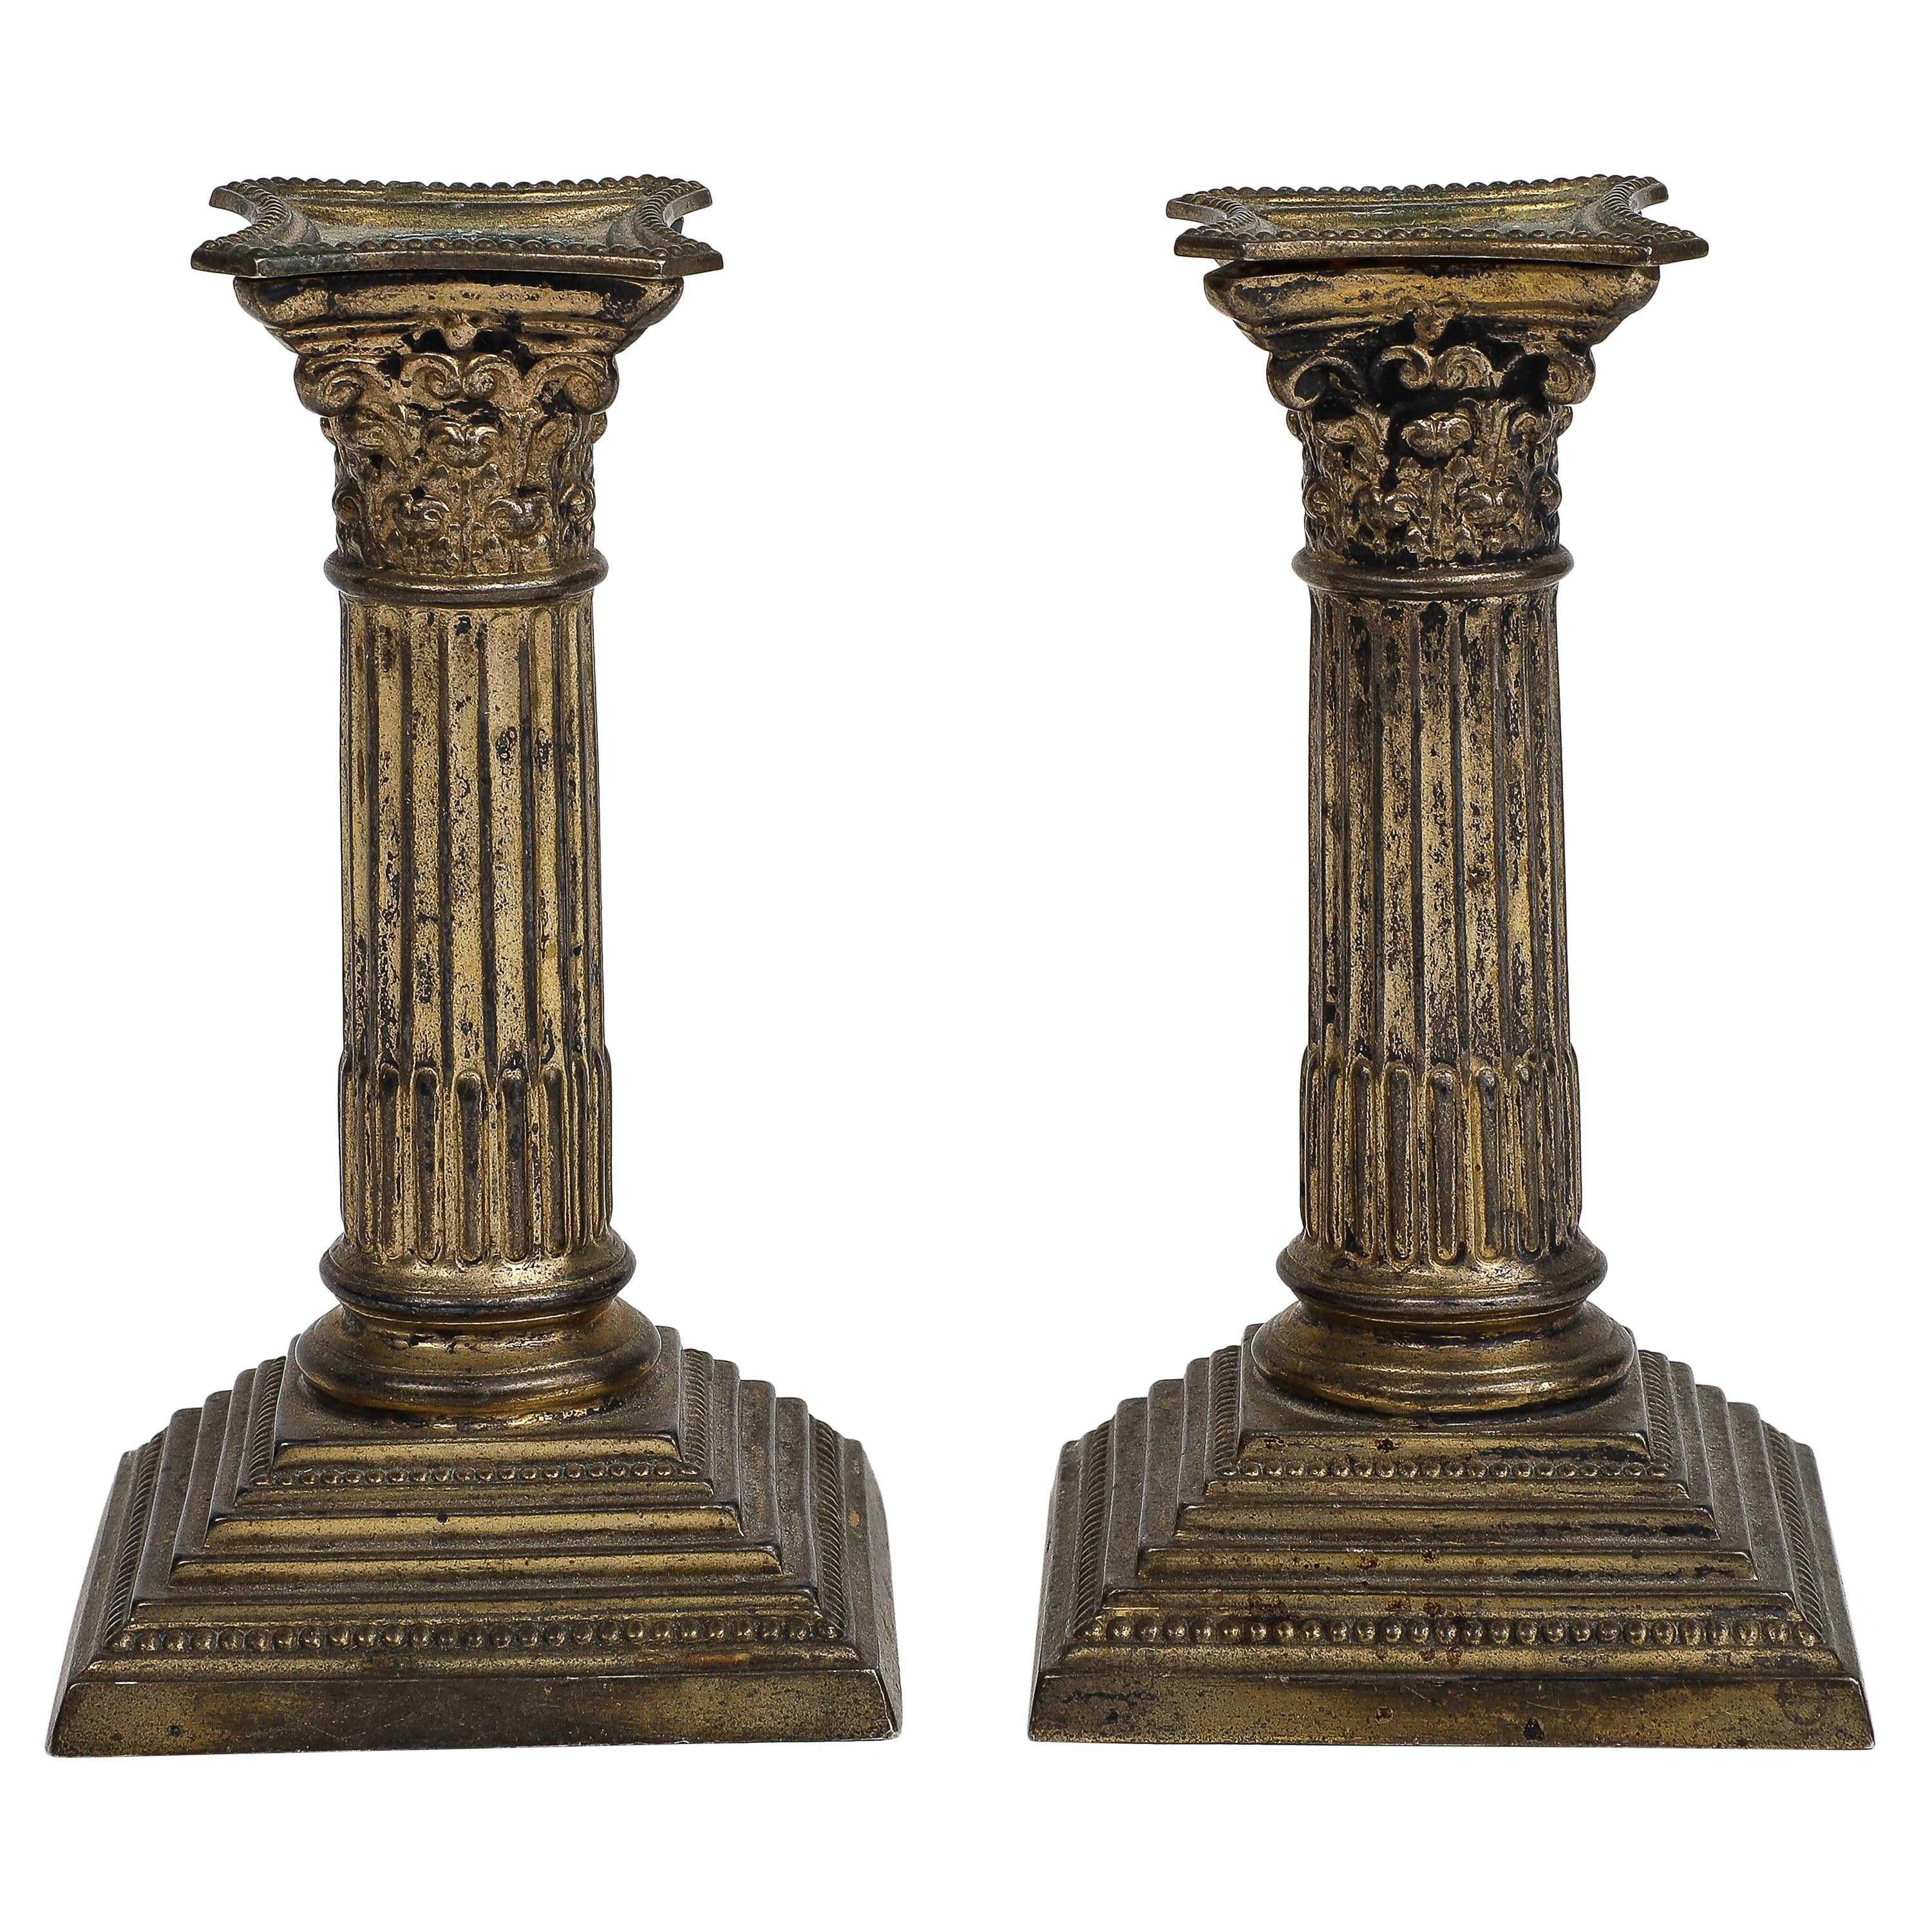 Pair of Midcentury Stone and Brass Column Candlesticks, circa 1950